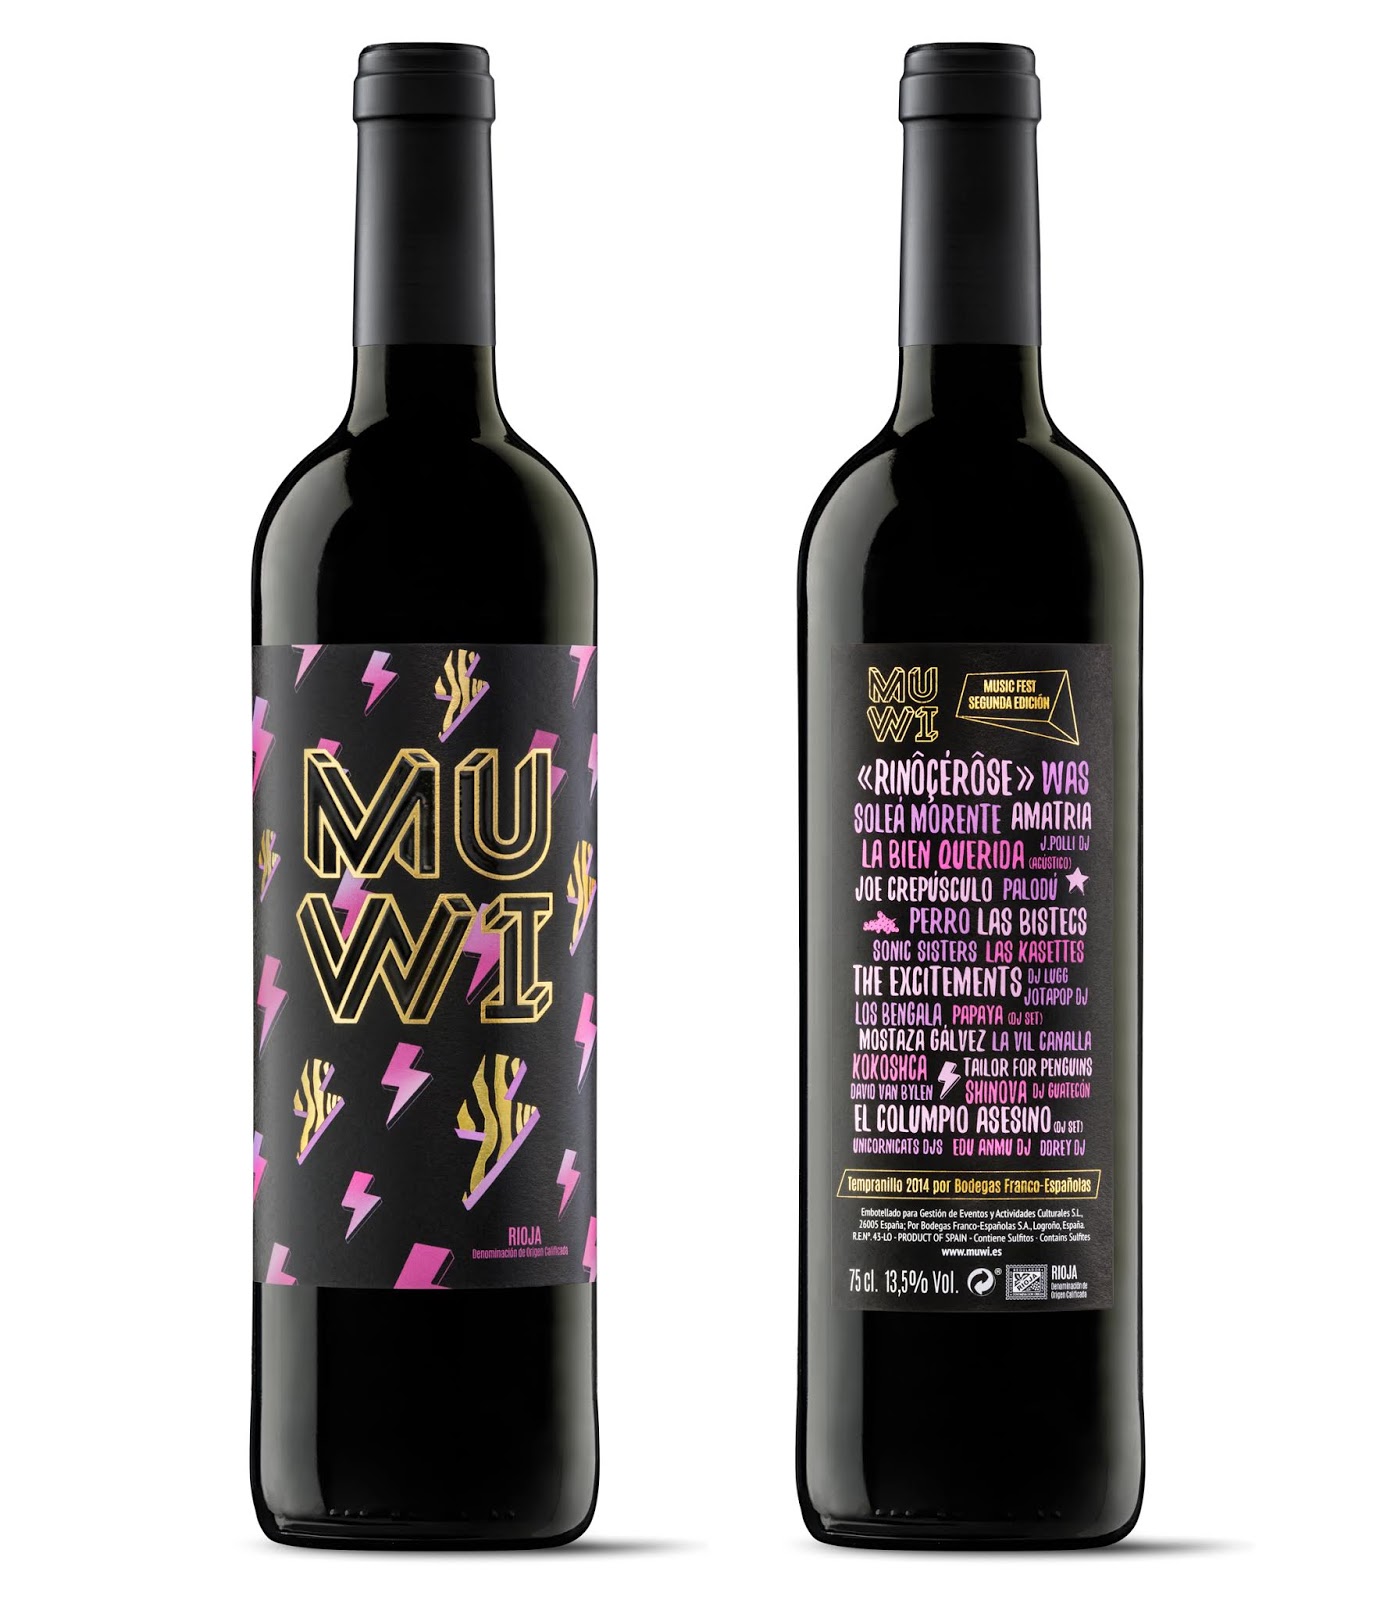 MUWI葡萄酒包装设计